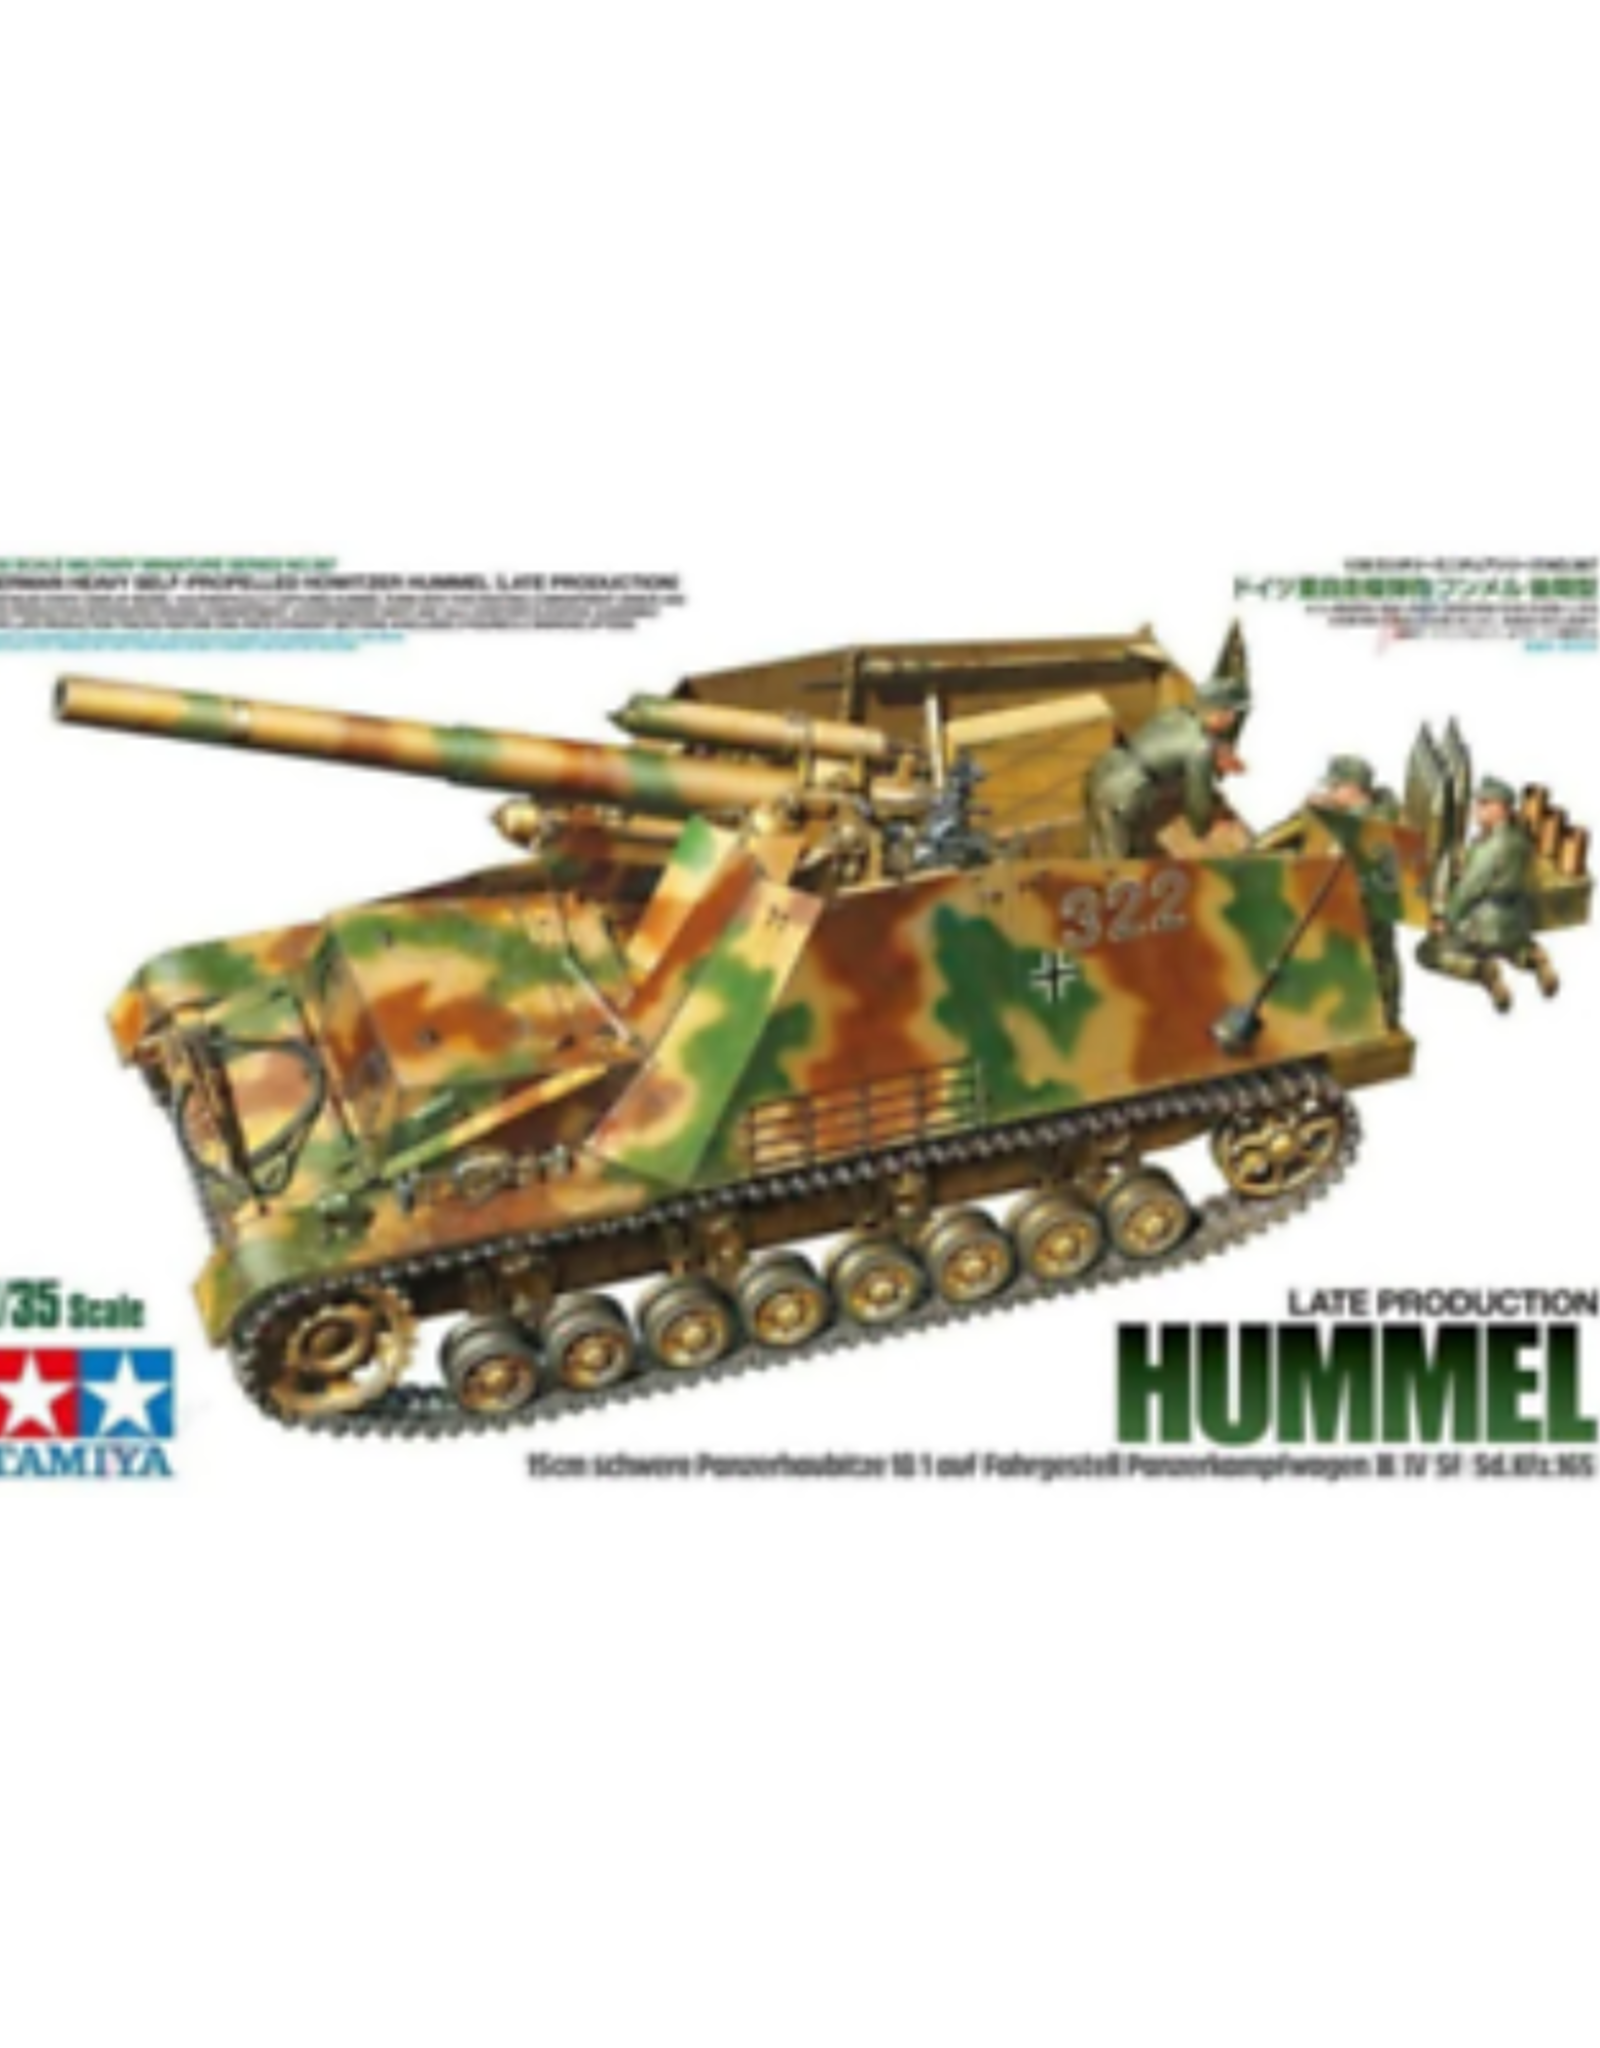 German Heavy Self-Propelled Howitzer Hummel (Late Family Fun